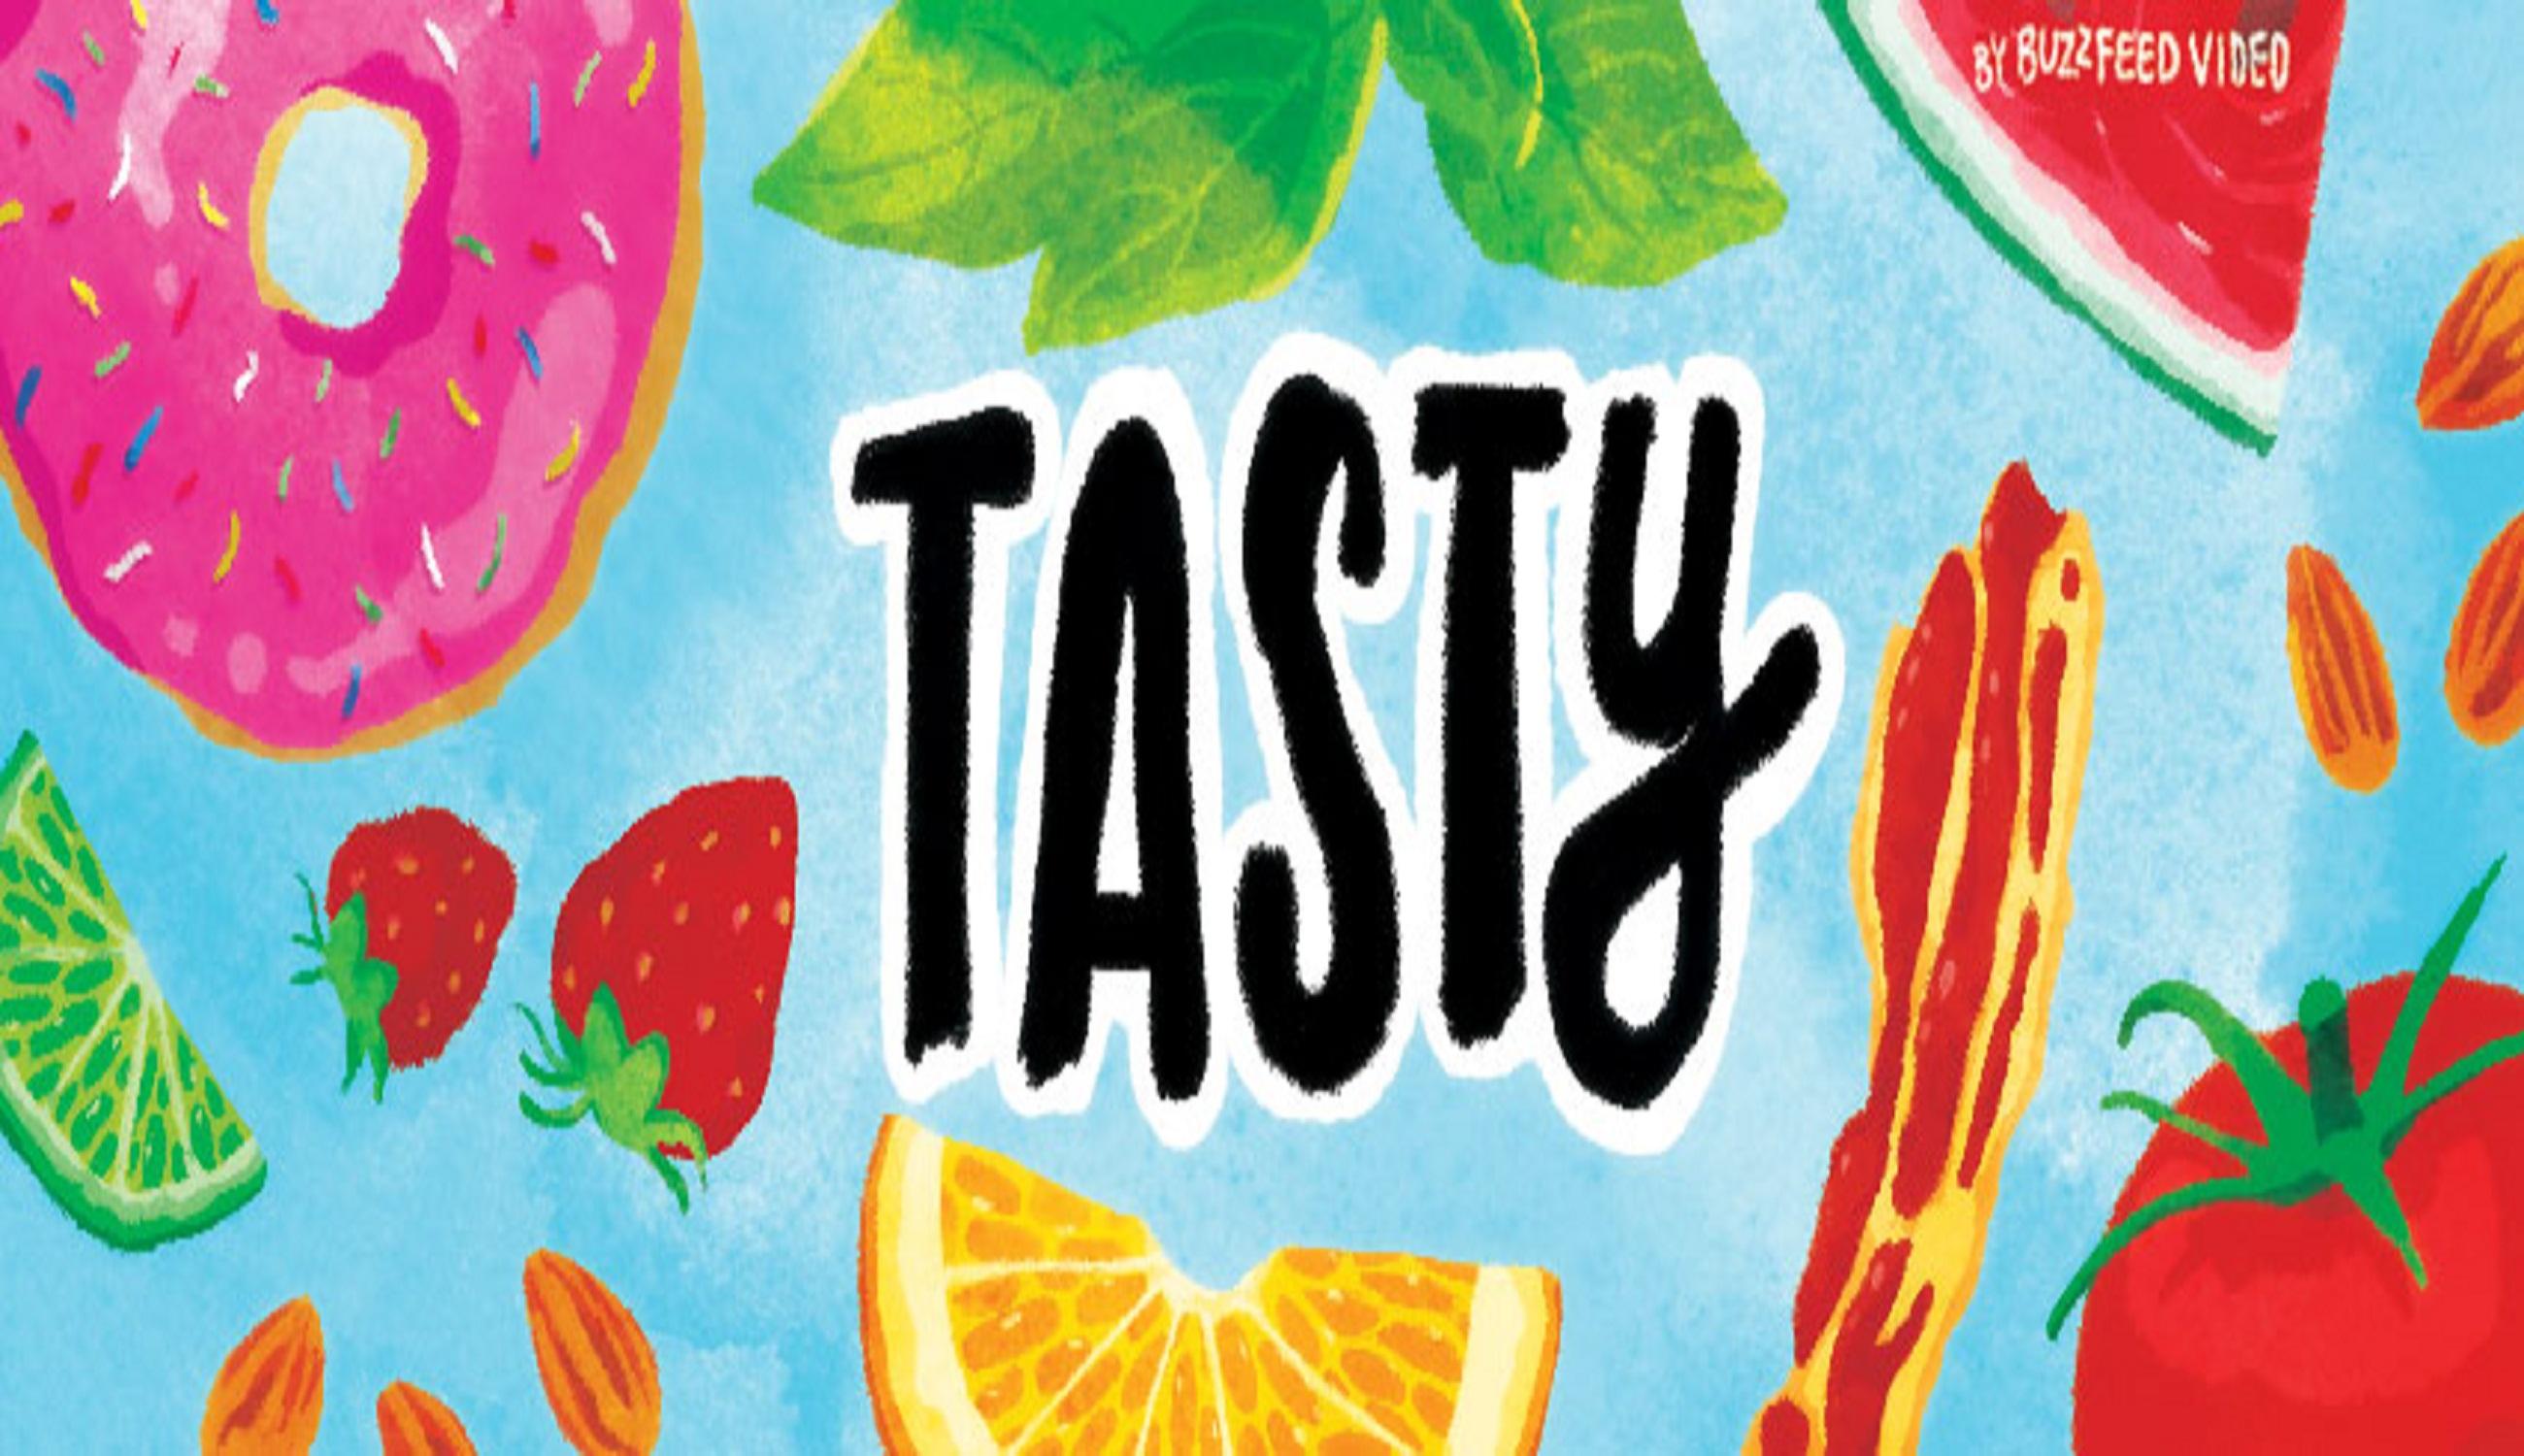 Tasty Logo - Buzzfeed's Social Video Strategy | Green Buzz Agency